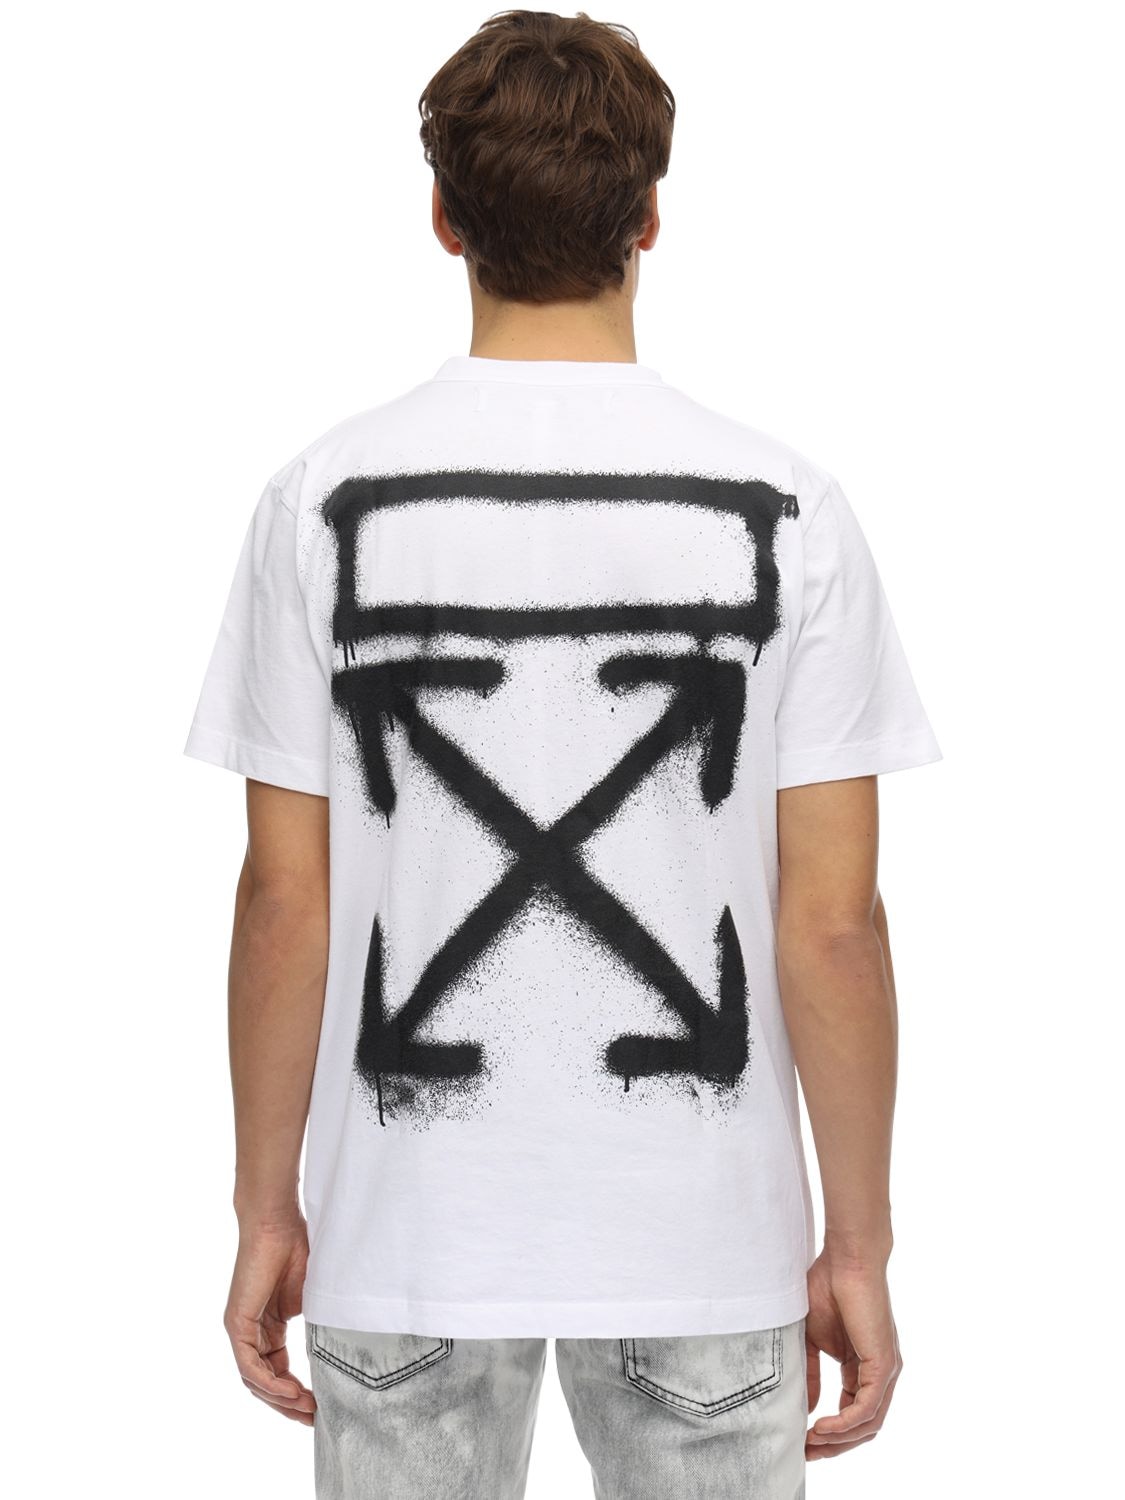 Print Spray Paint Slim Jersey T-shirt | The Fashionisto